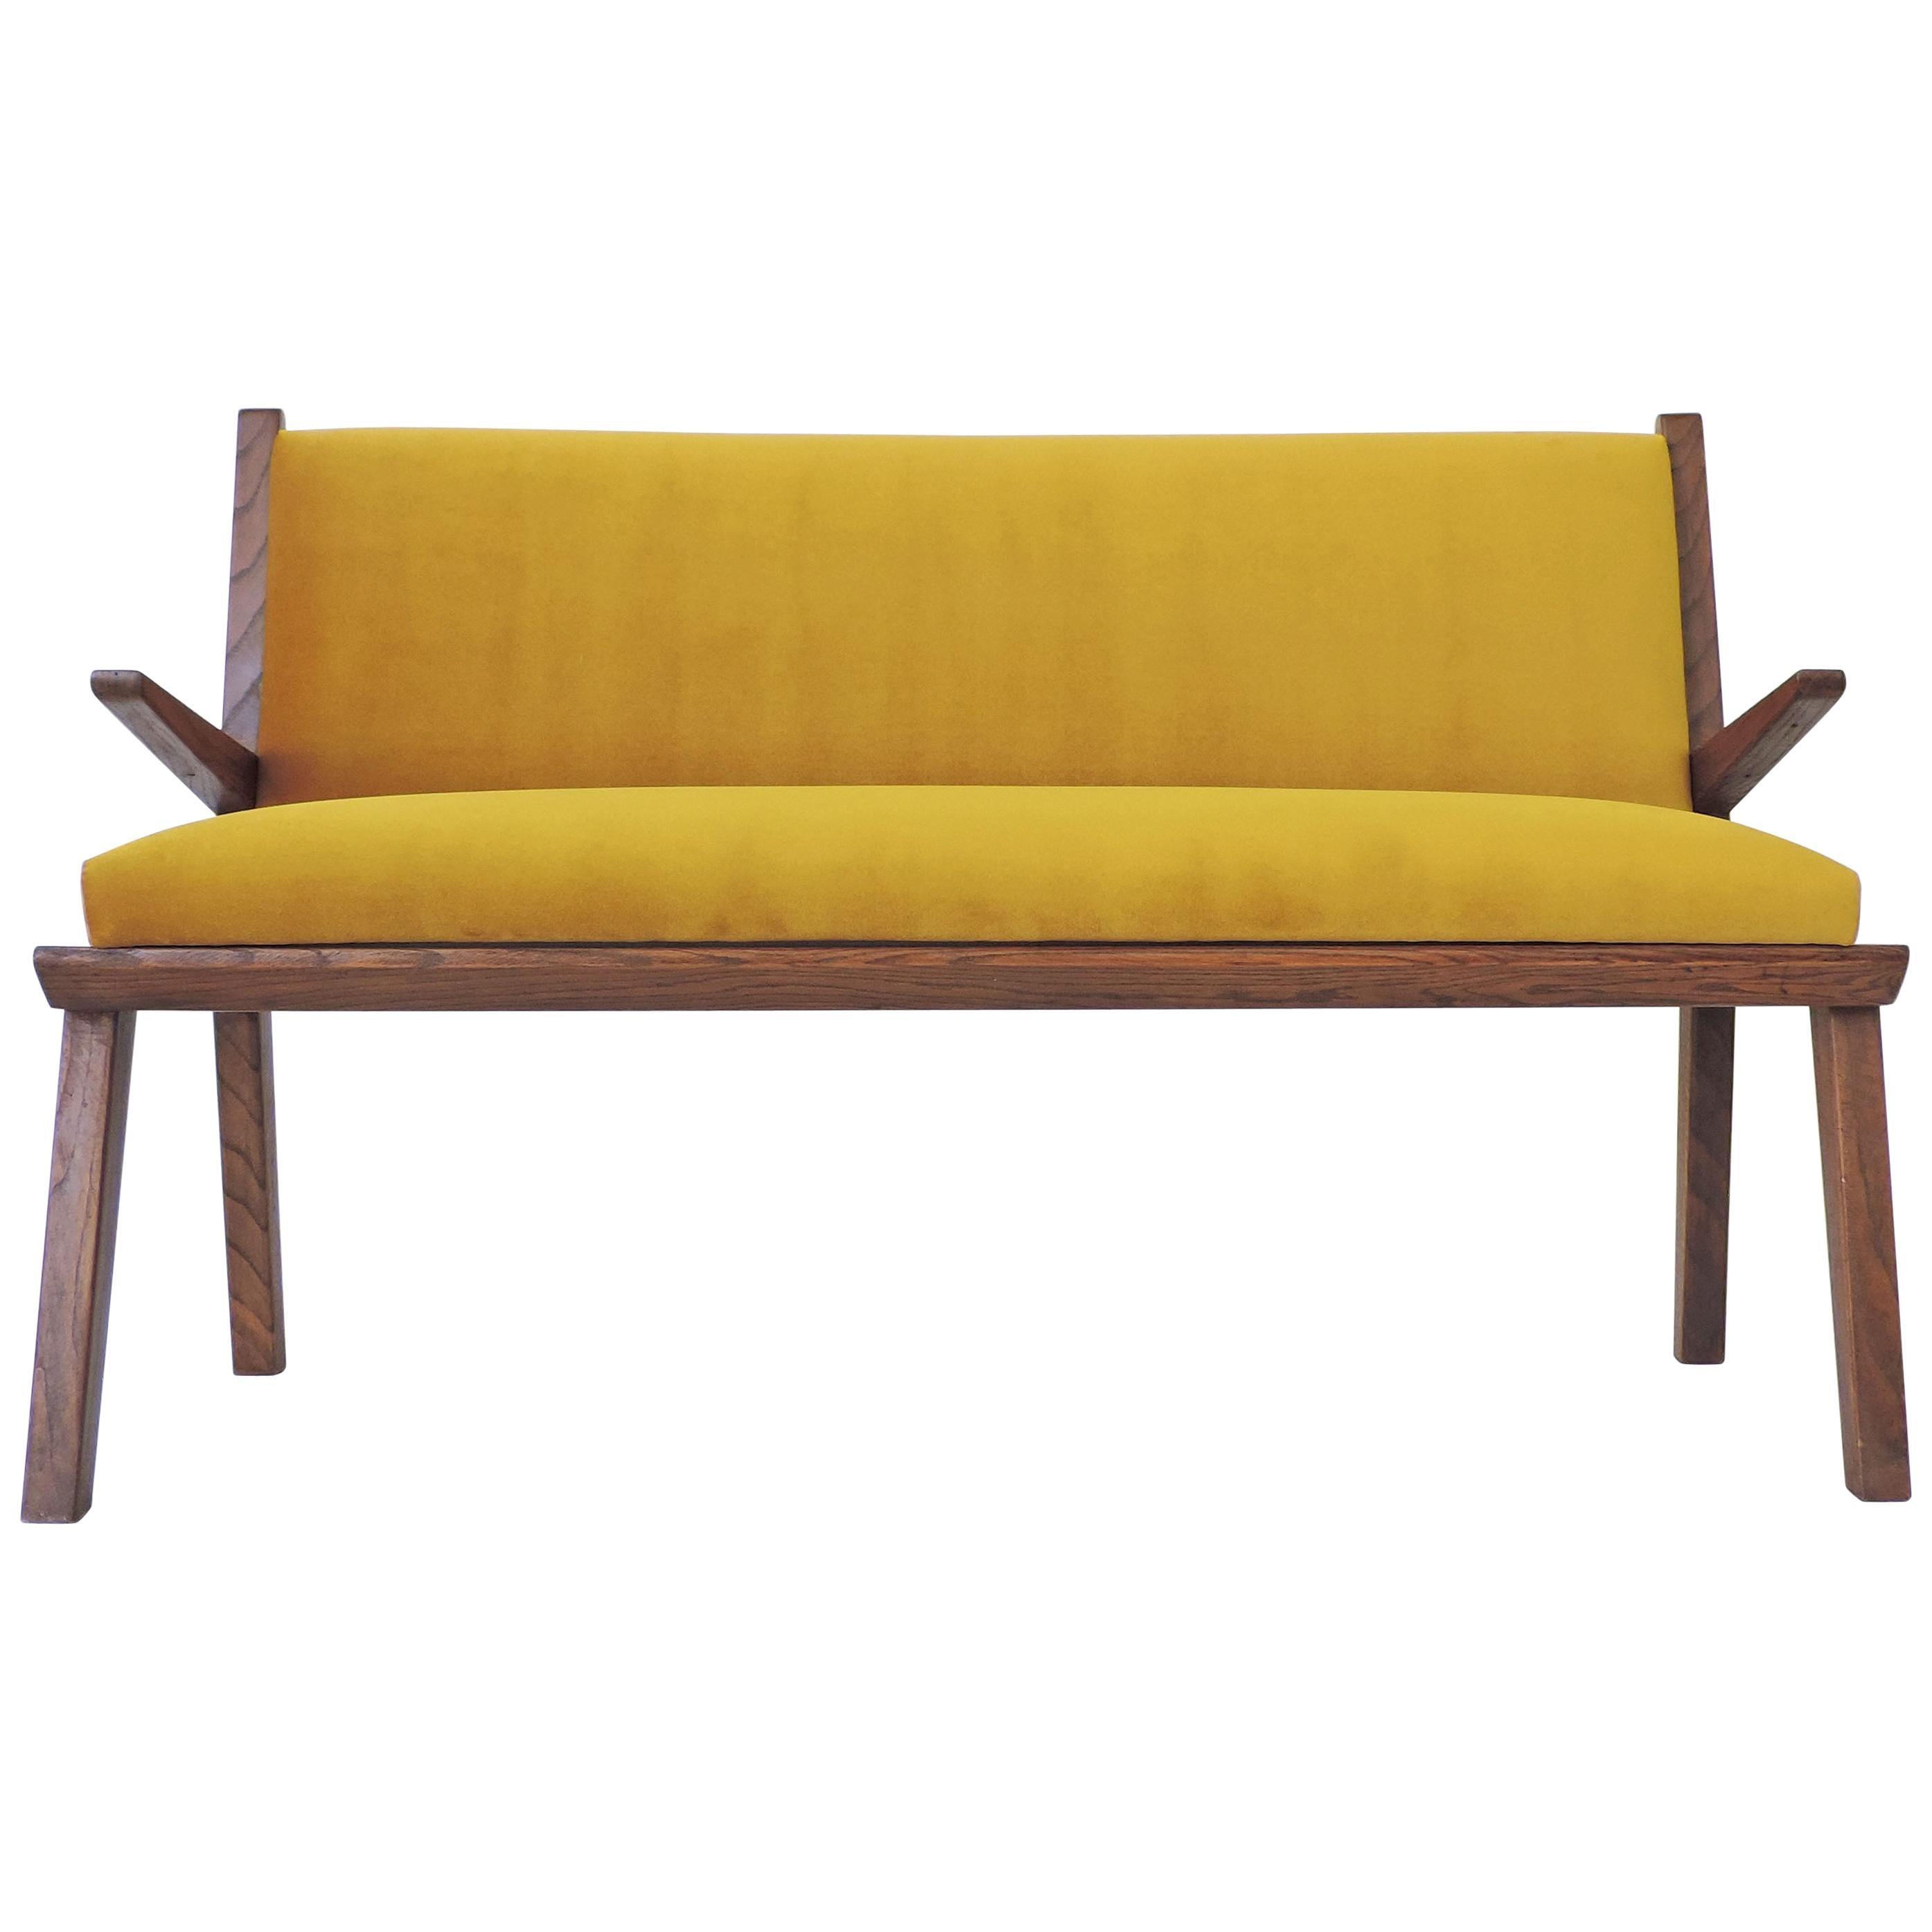 Italian 1940s Bench in Wood and Yellow Velvet Upholstery